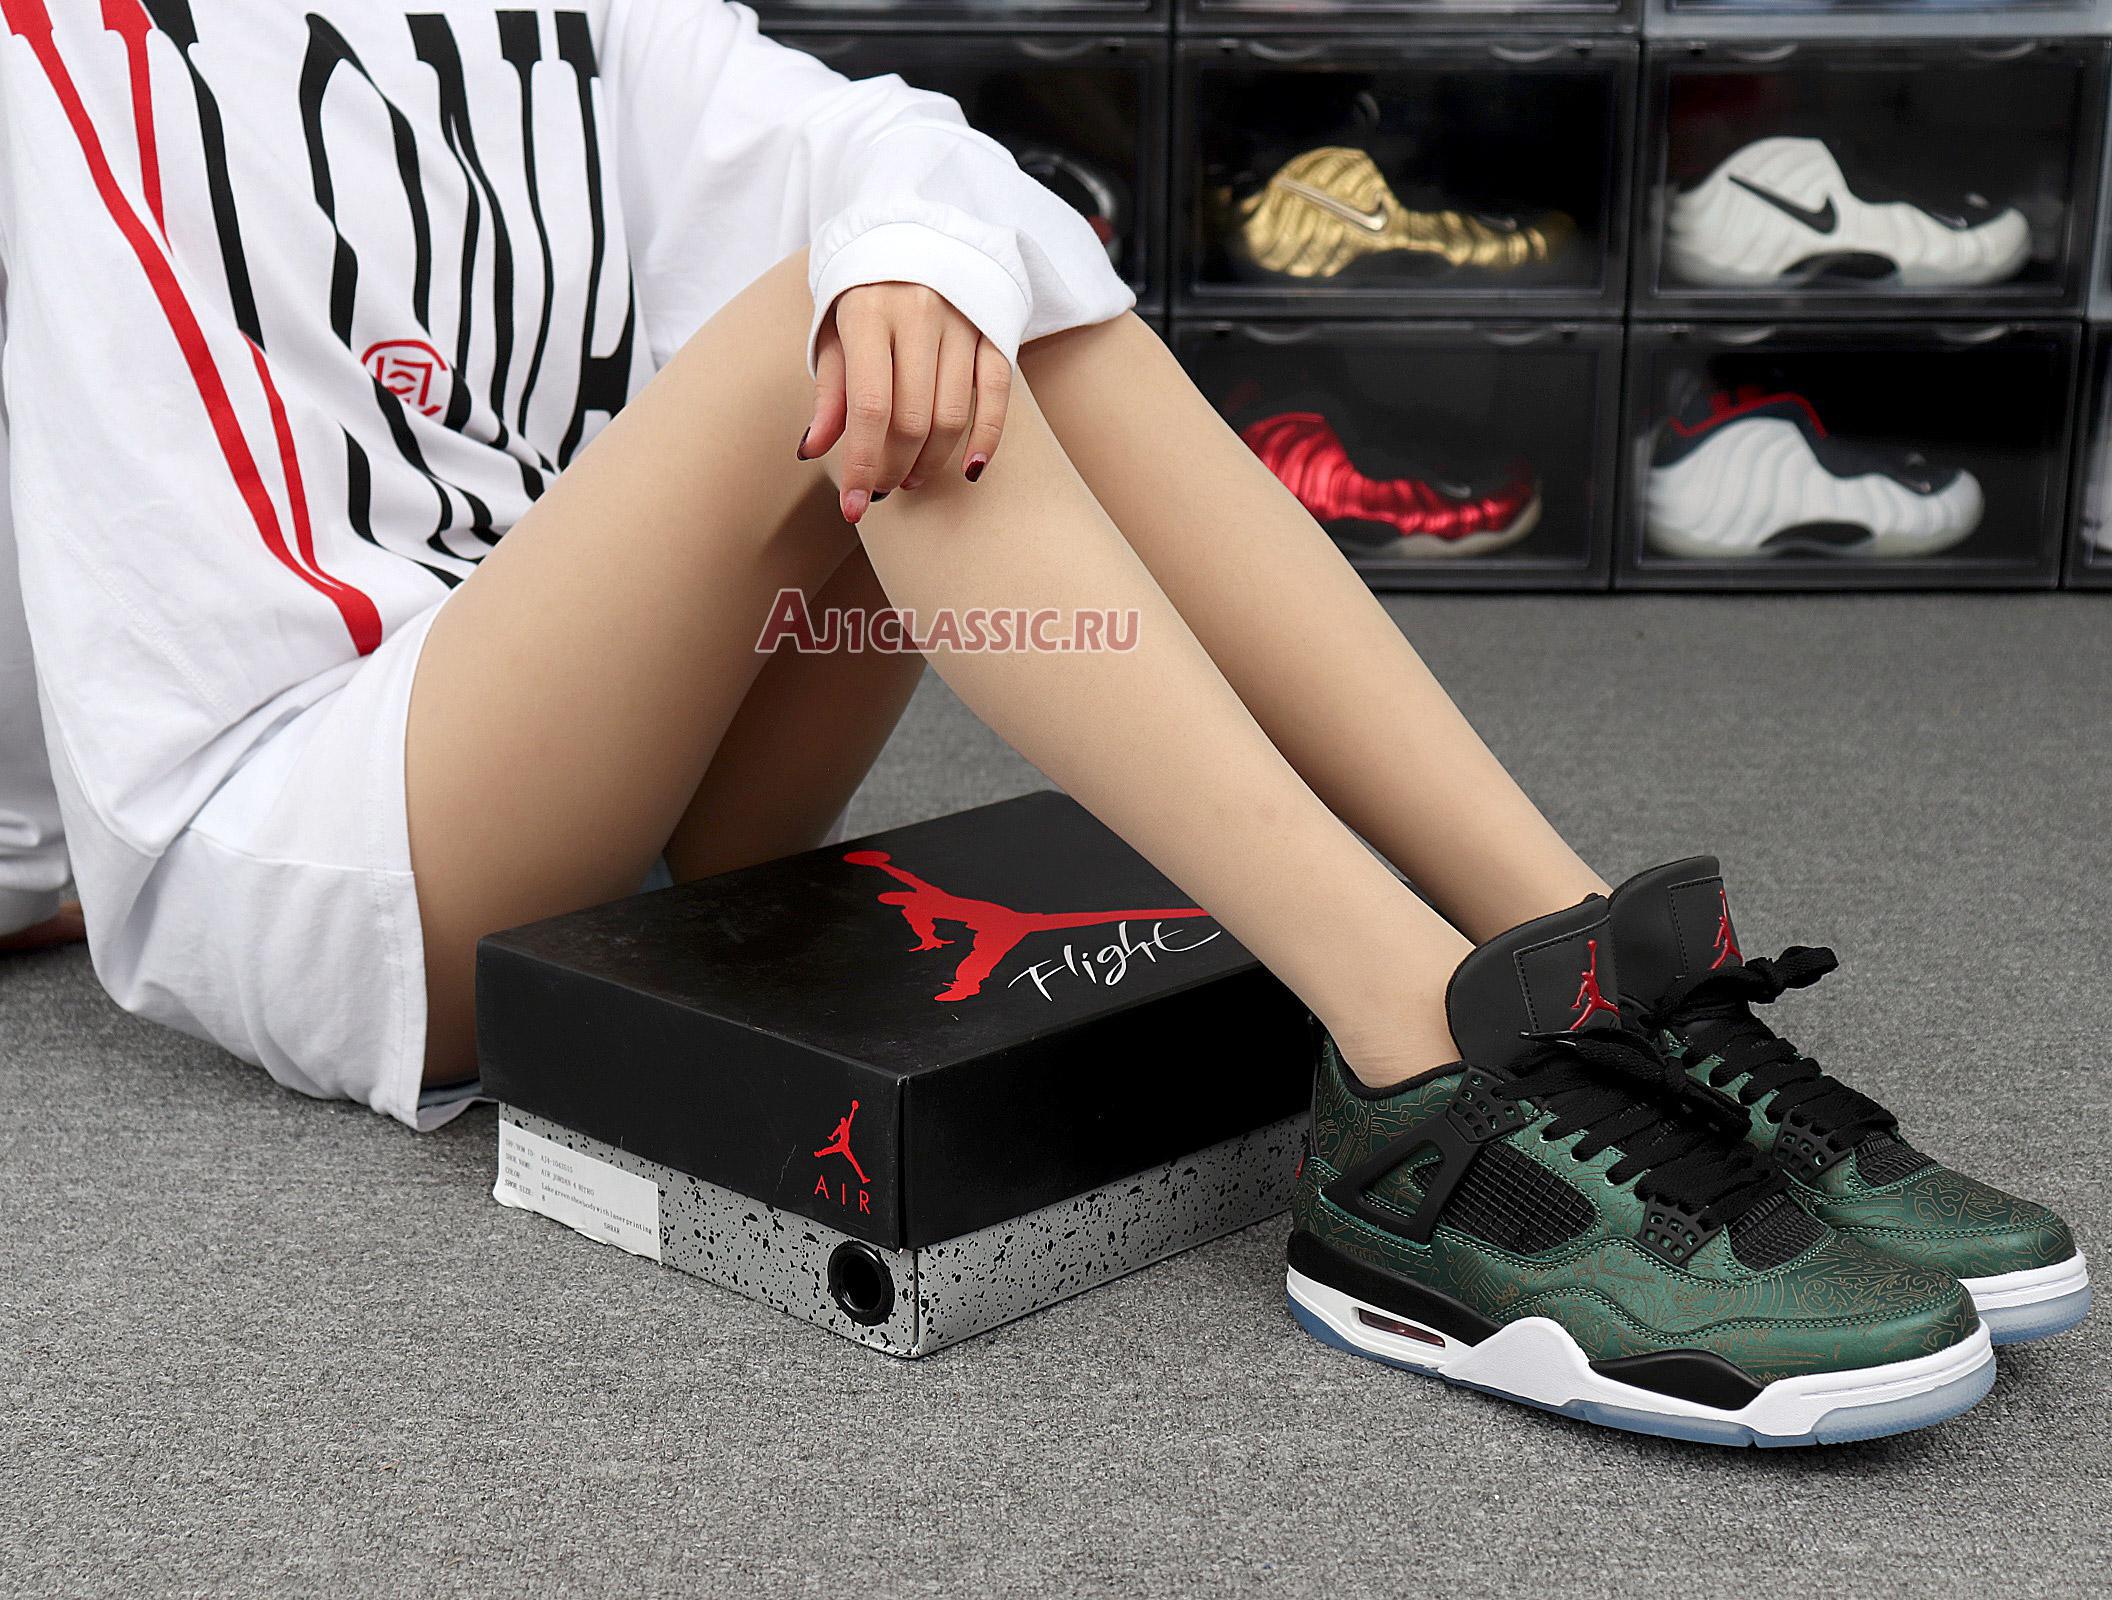 Air Jordan 4 Laser Jalen Ramsey AJ4-1043515 Green/Black Sneakers